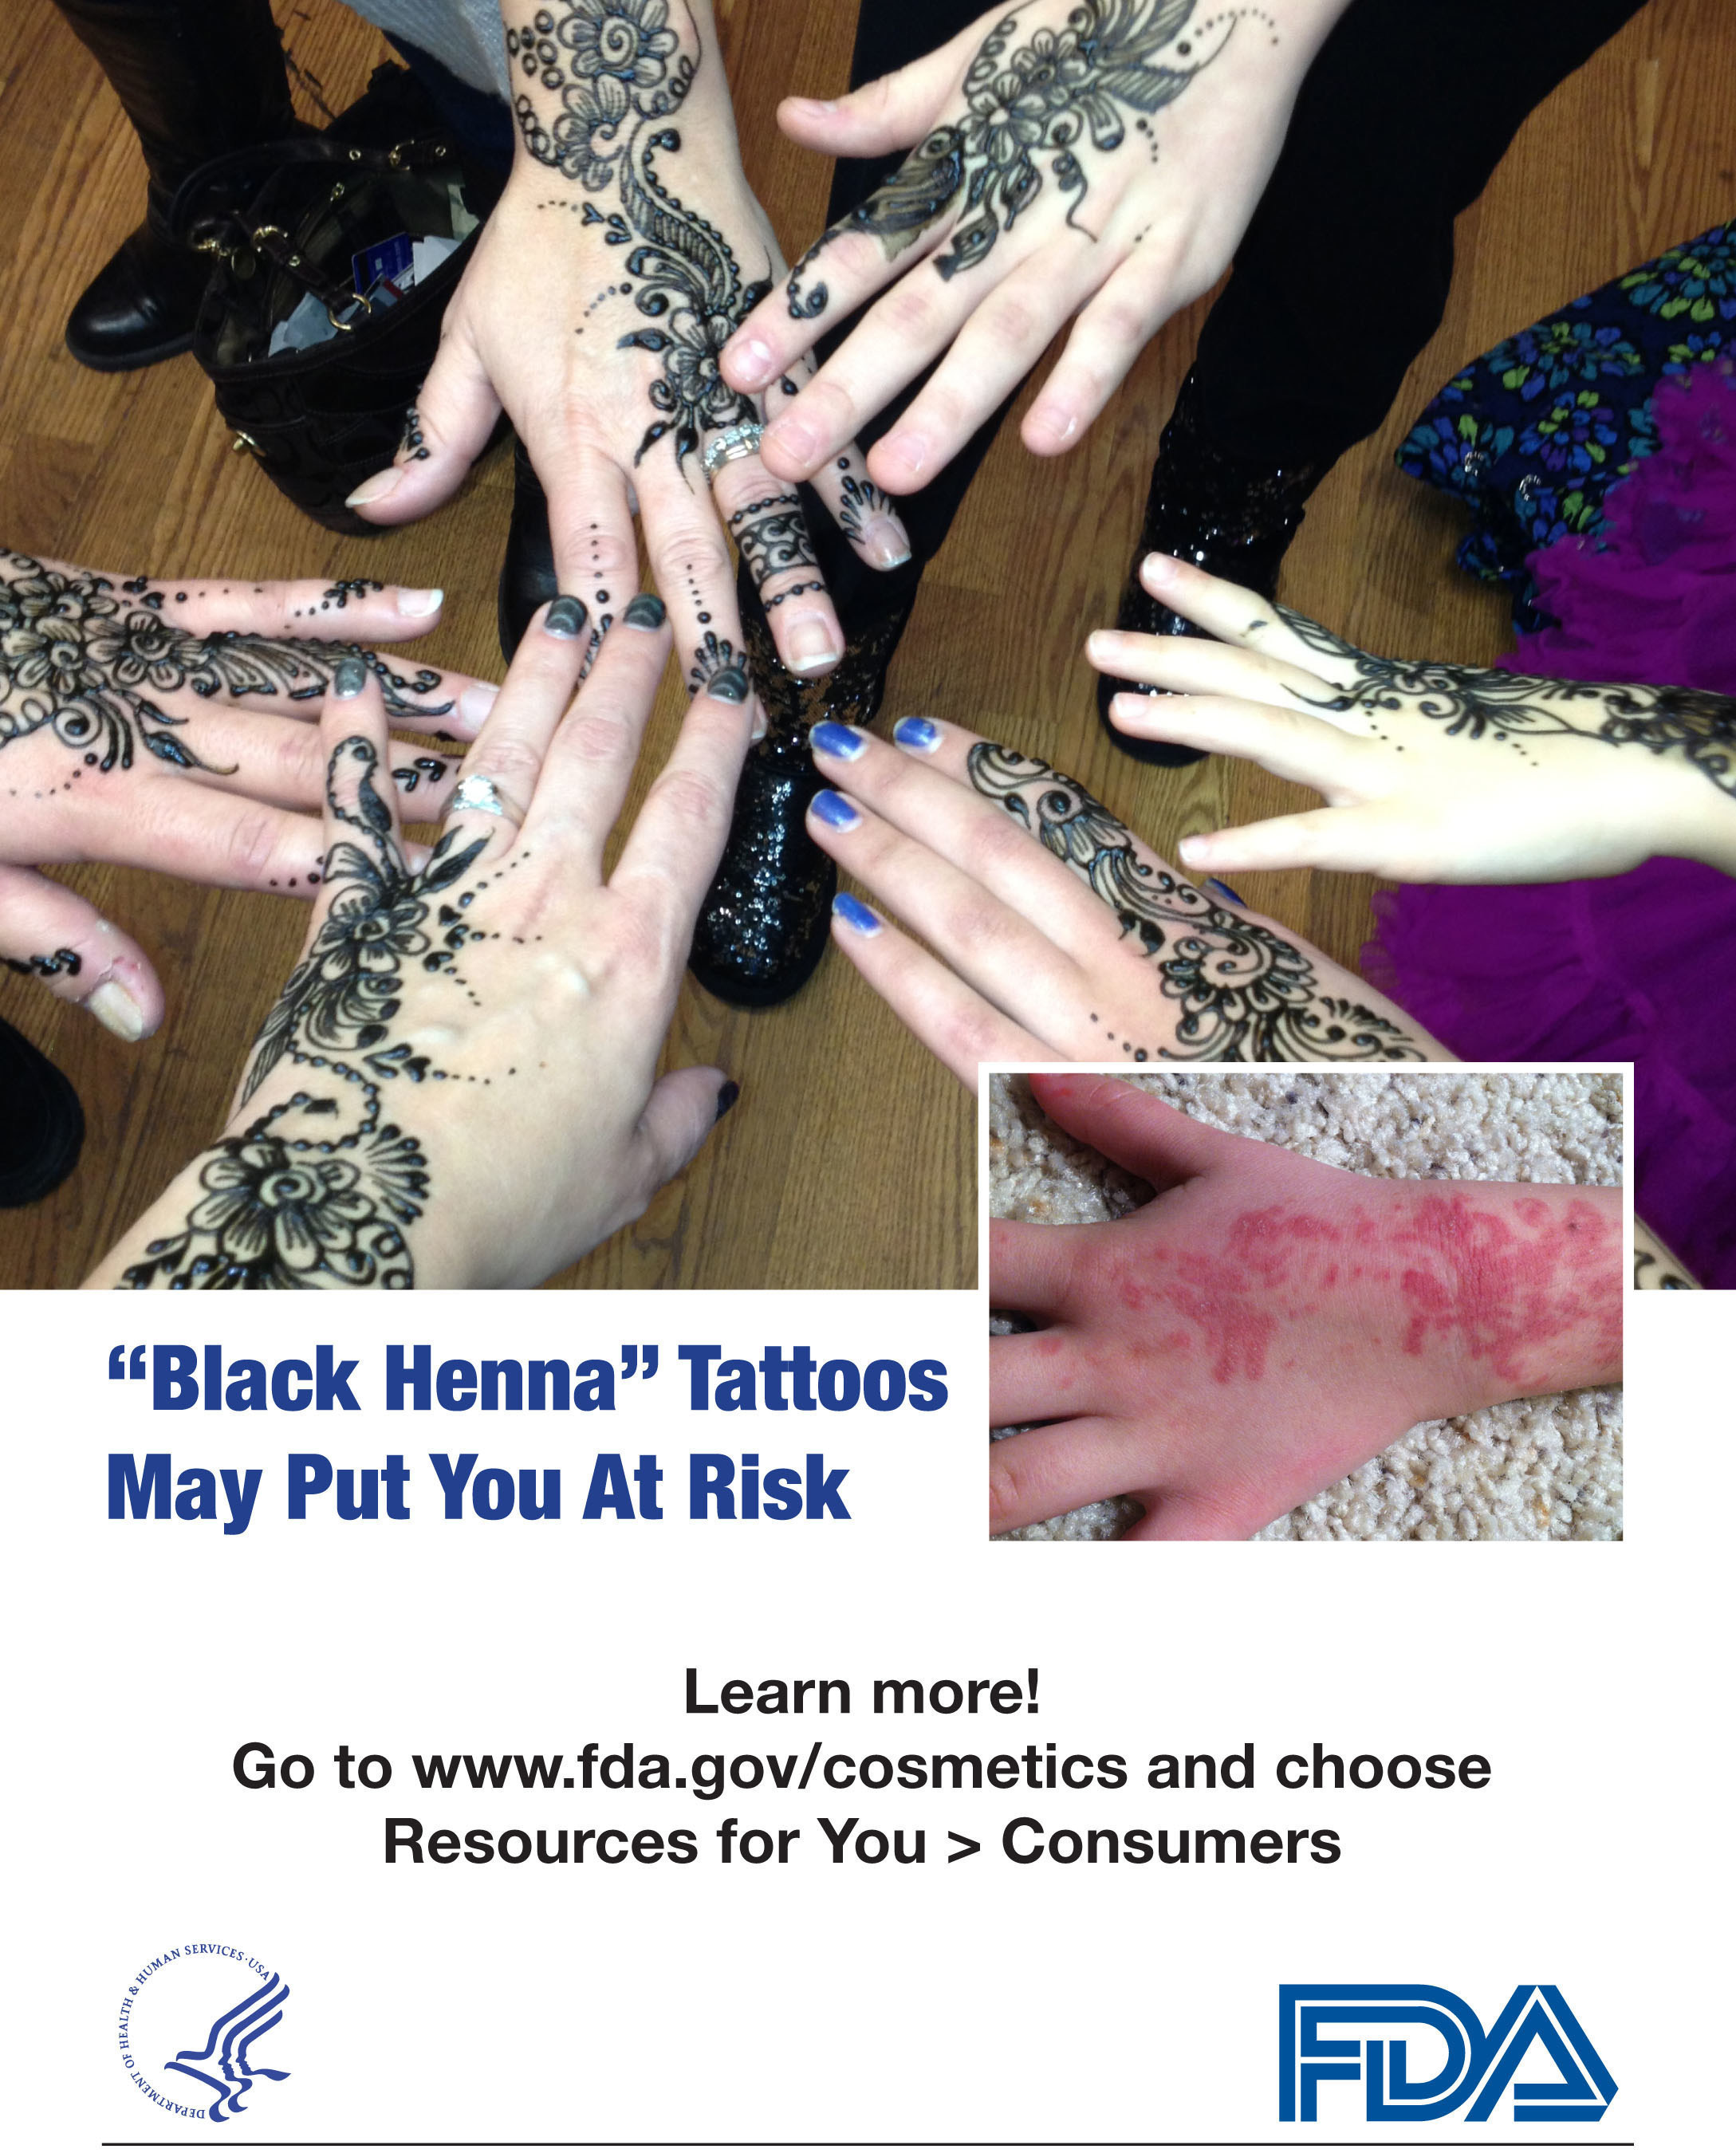 "Black Henna" Tattoos May Put You at Risk